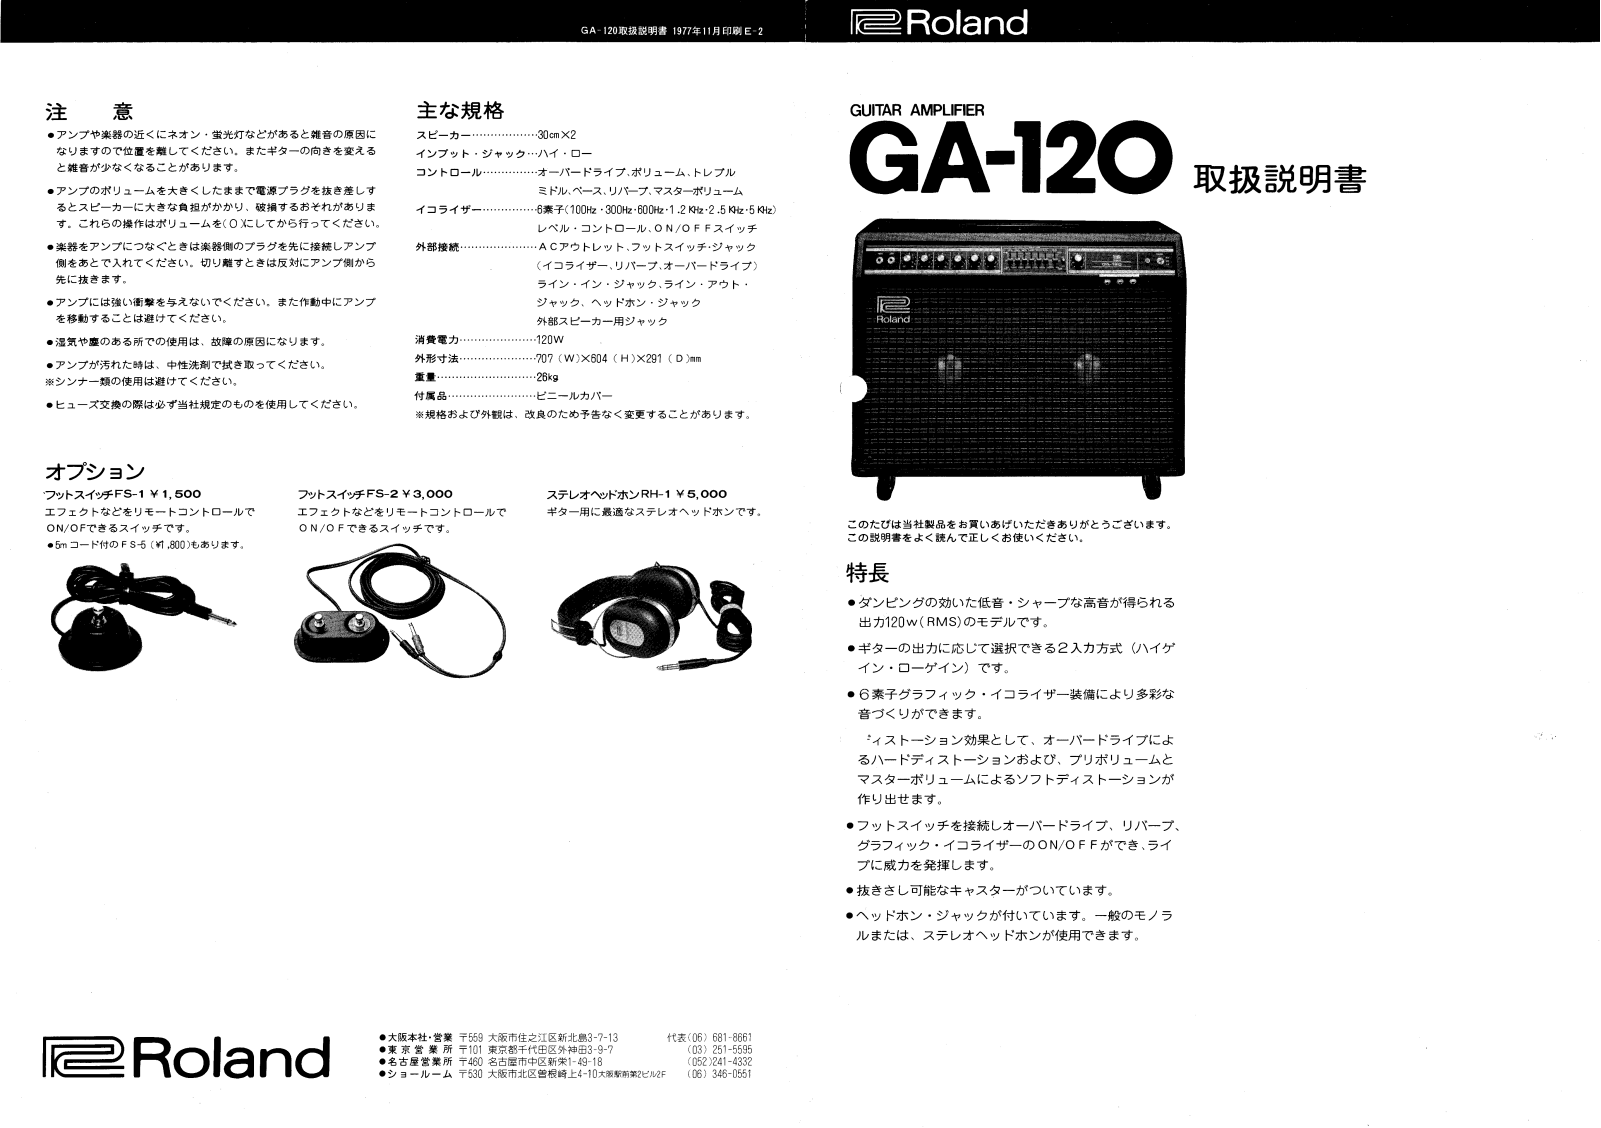 Roland GA-120 Owner’s Manual